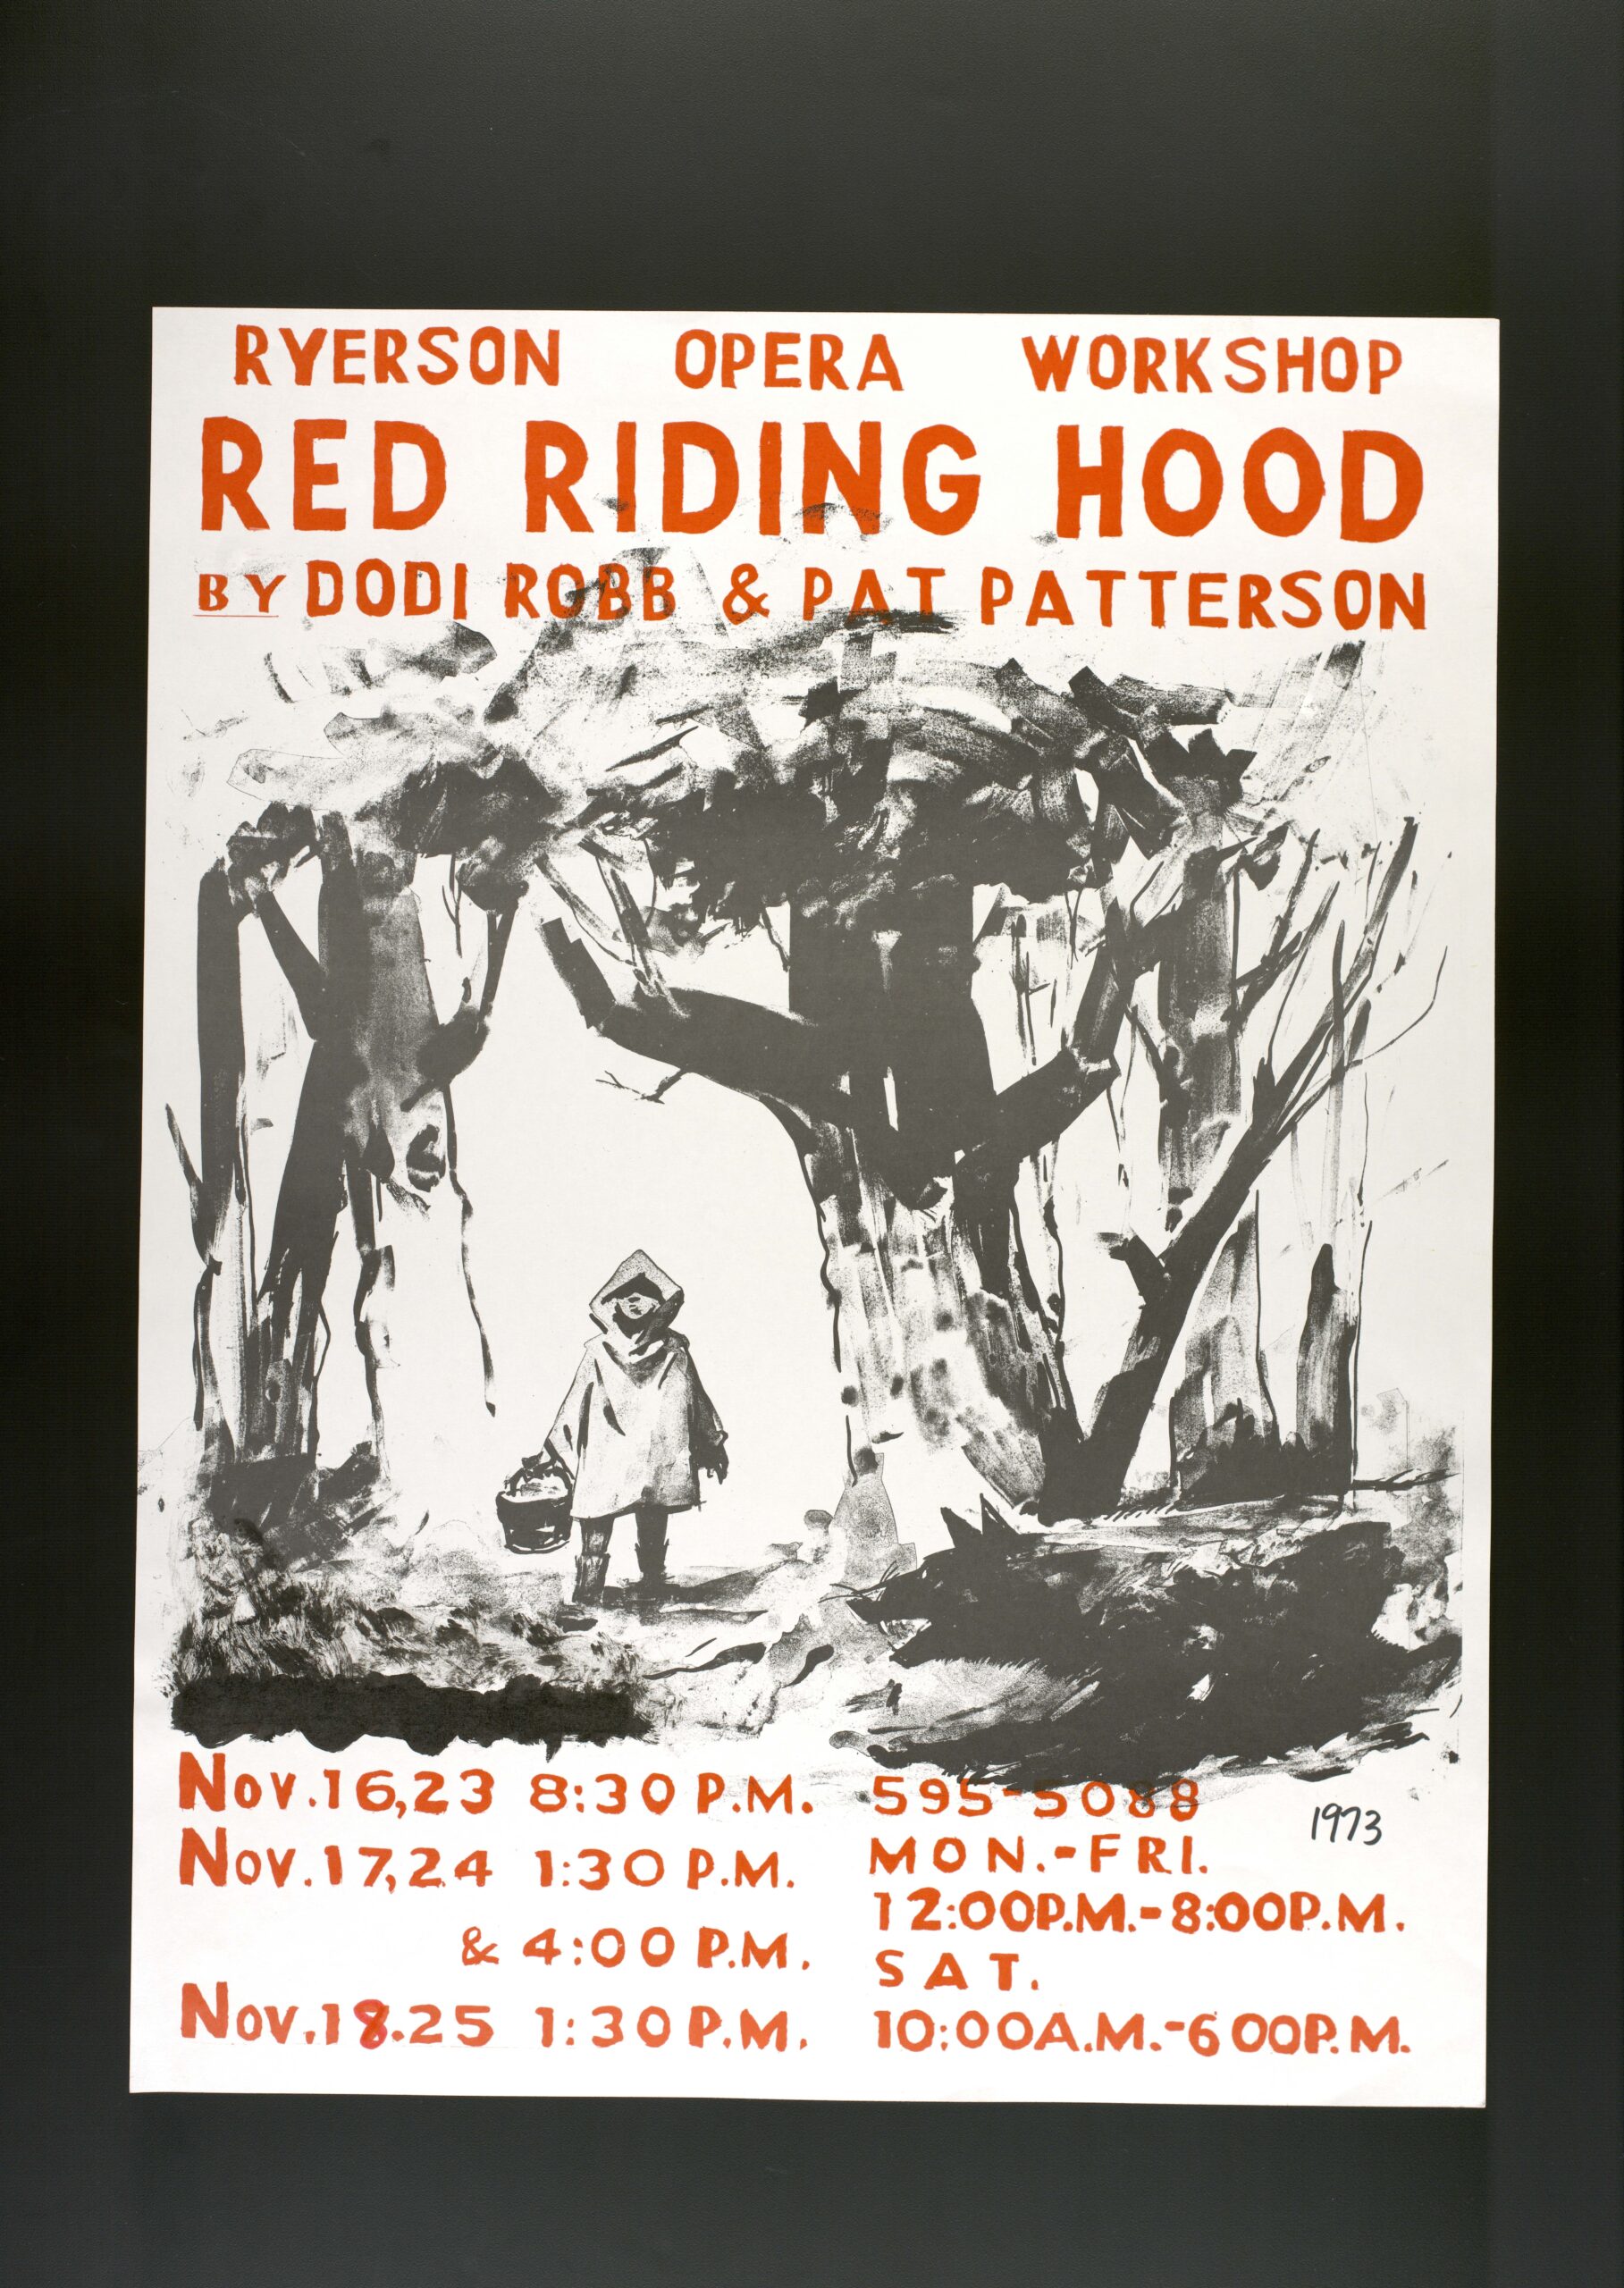 Red Riding Hood Ryerson opera workshop poster, 1973